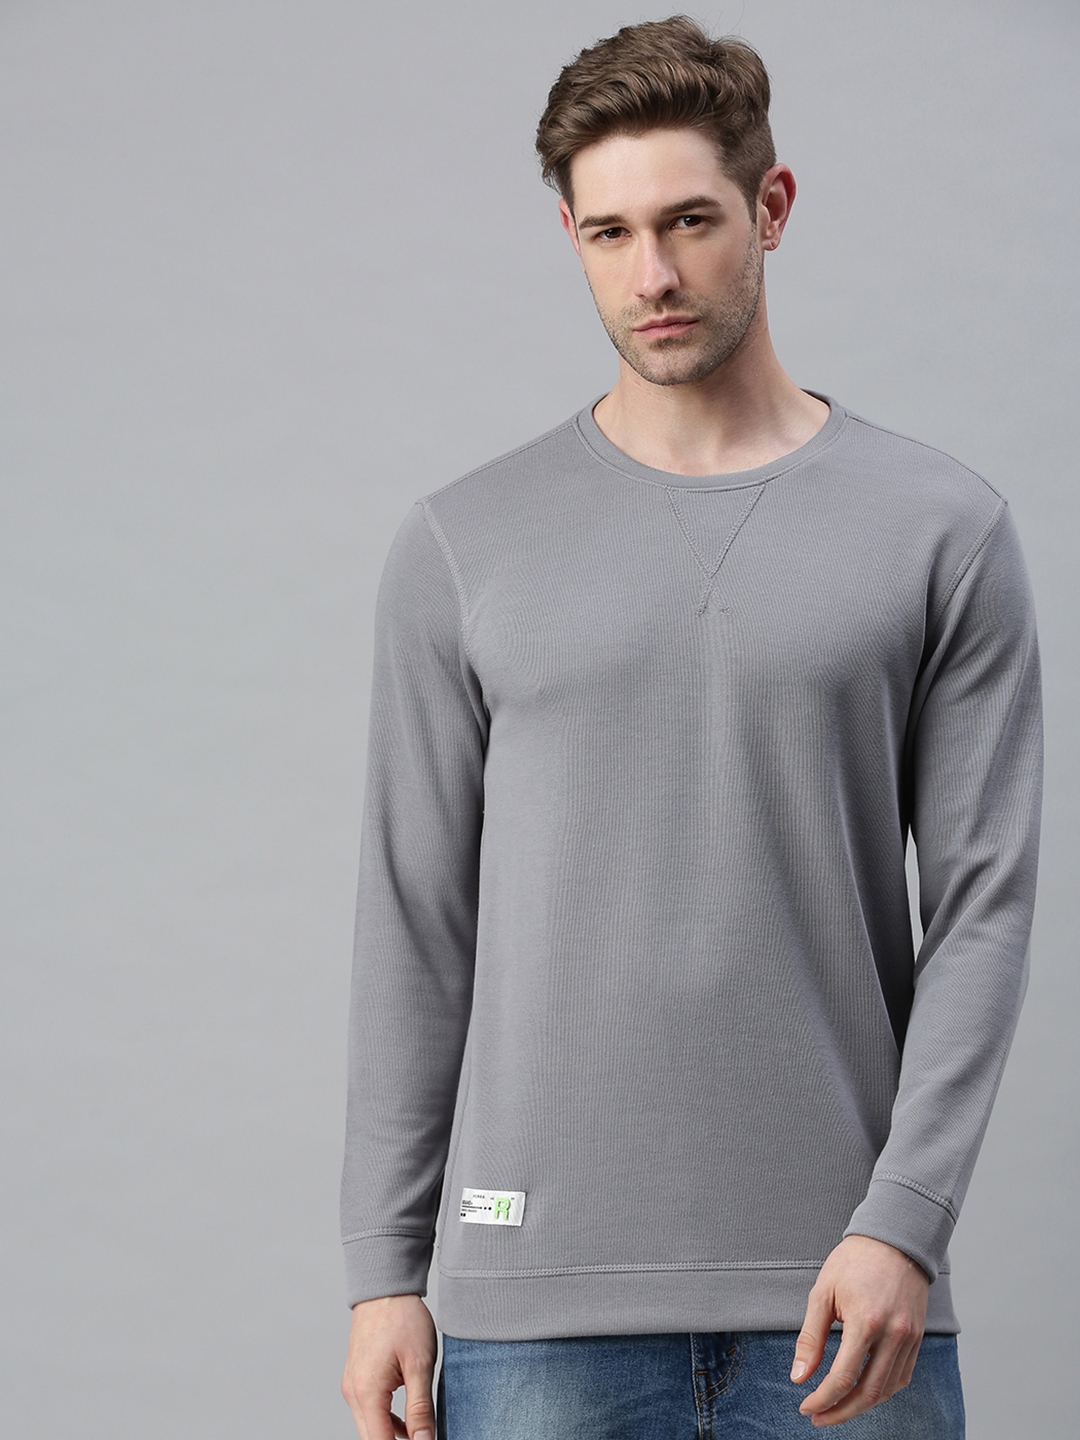 Men's Grey Cotton Blend Solid Sweatshirts